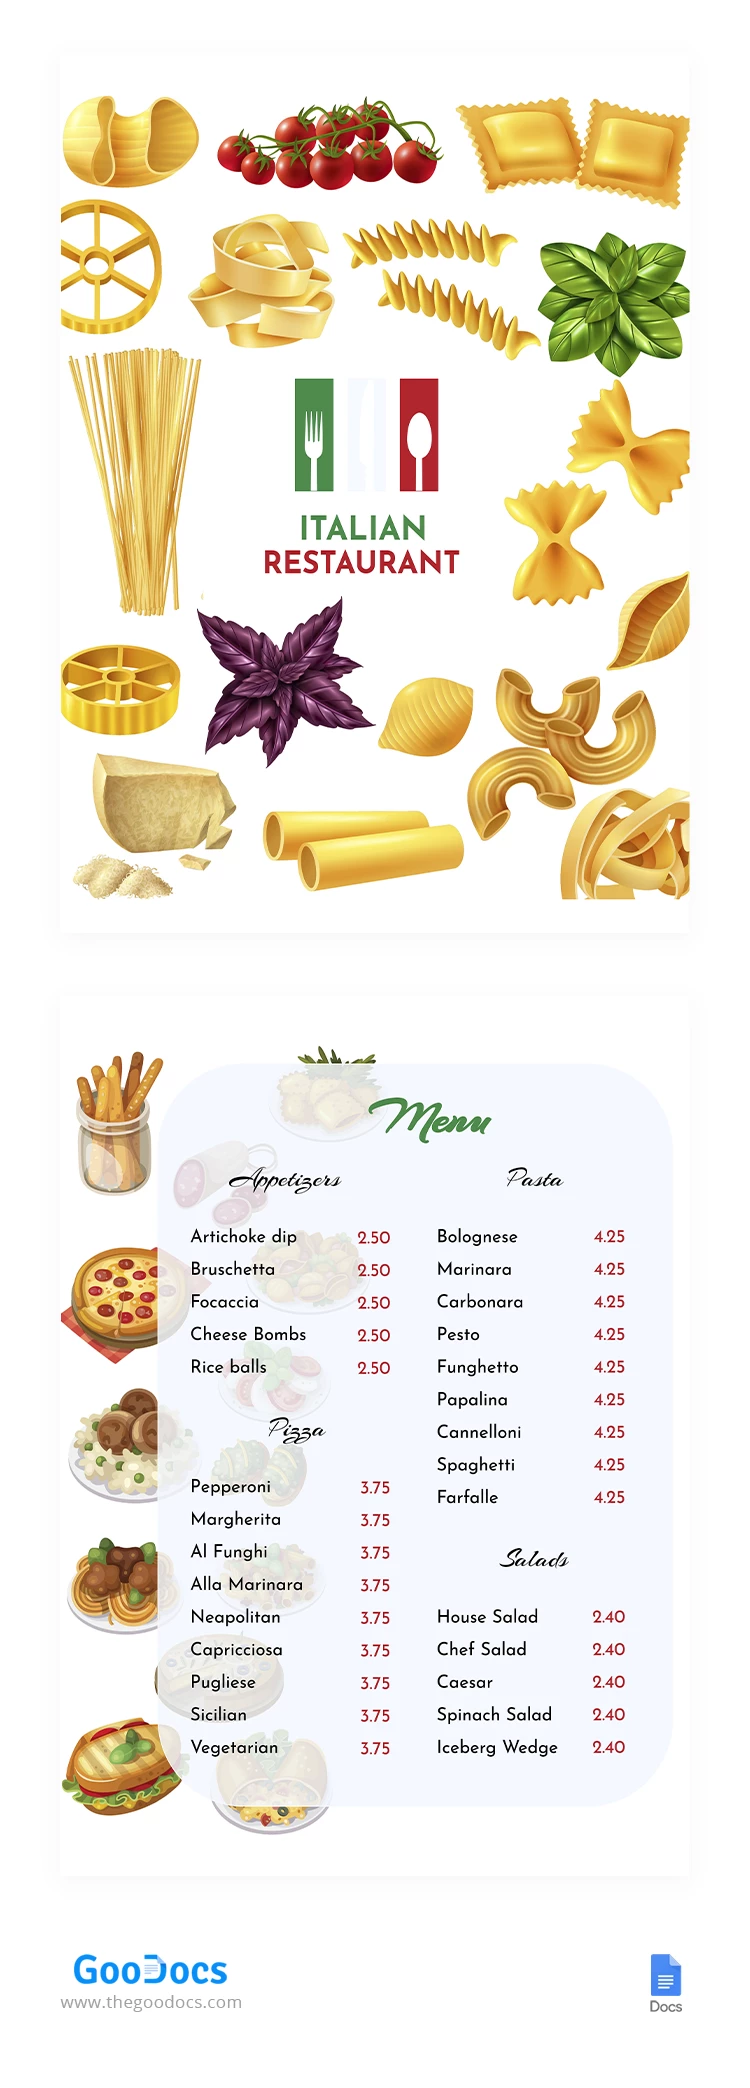 Menú del restaurante italiano - free Google Docs Template - 10064558